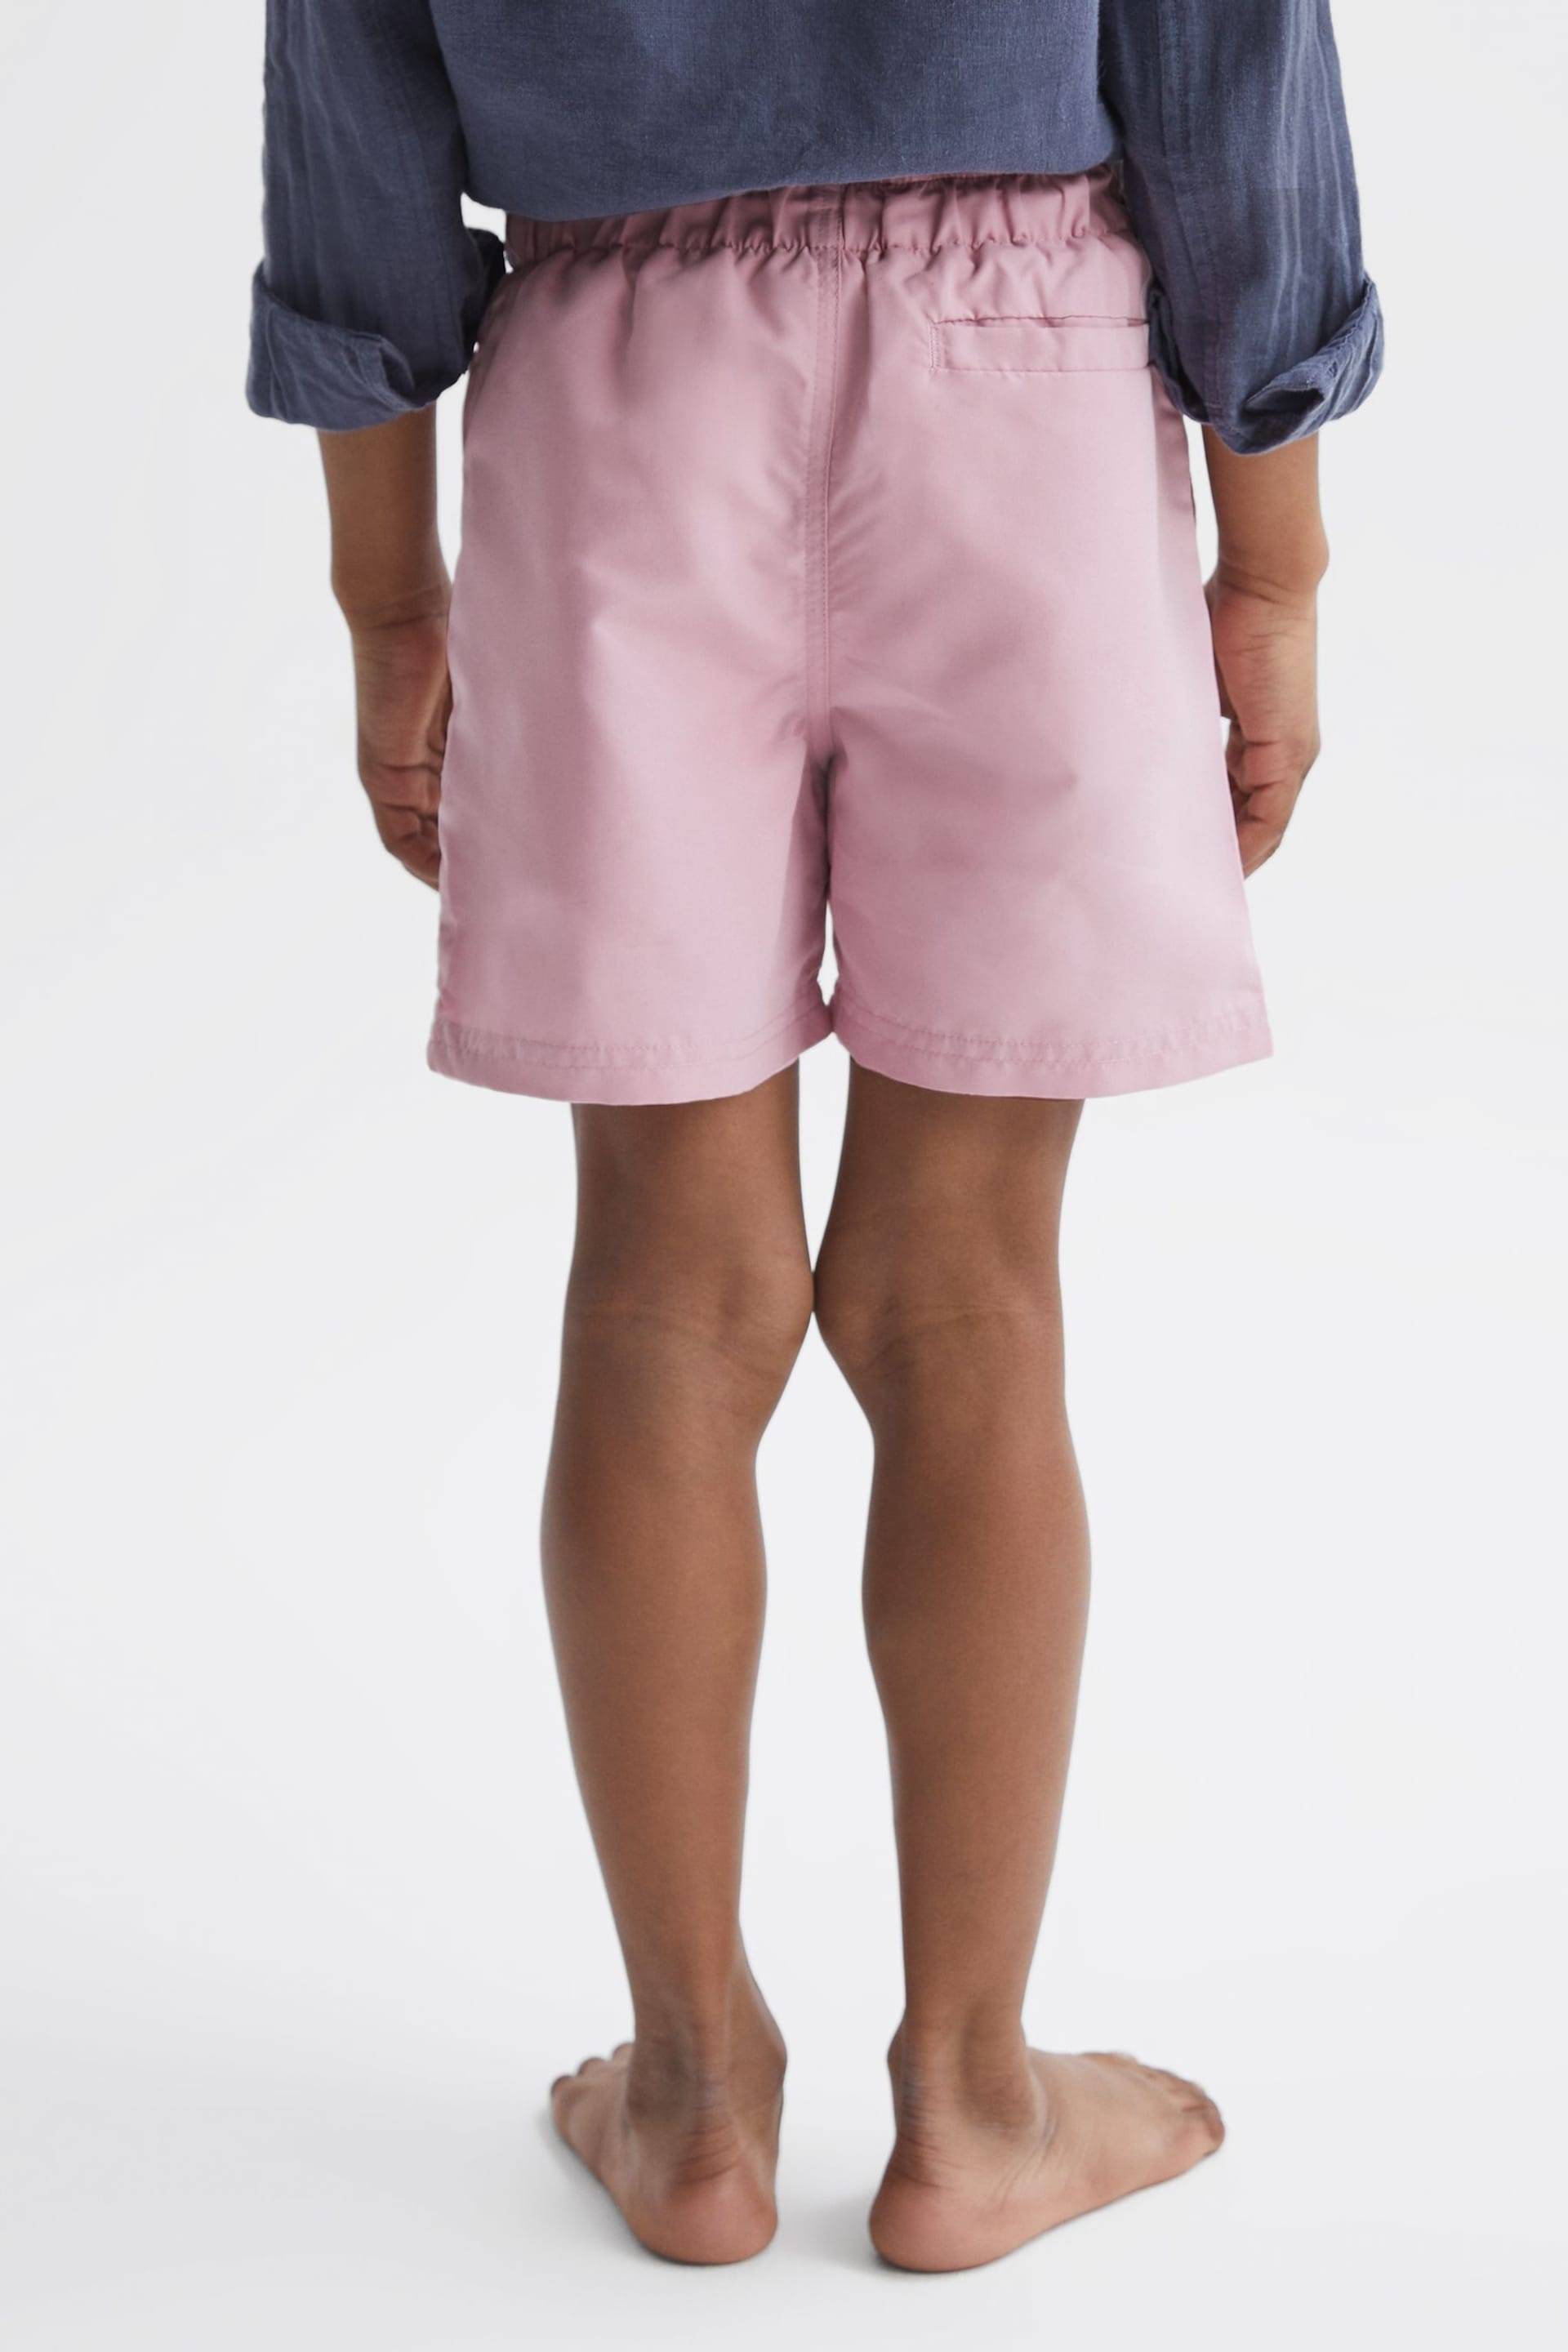 Reiss Soft Pink Wave Senior Plain Drawstring Swim Shorts - Image 5 of 7